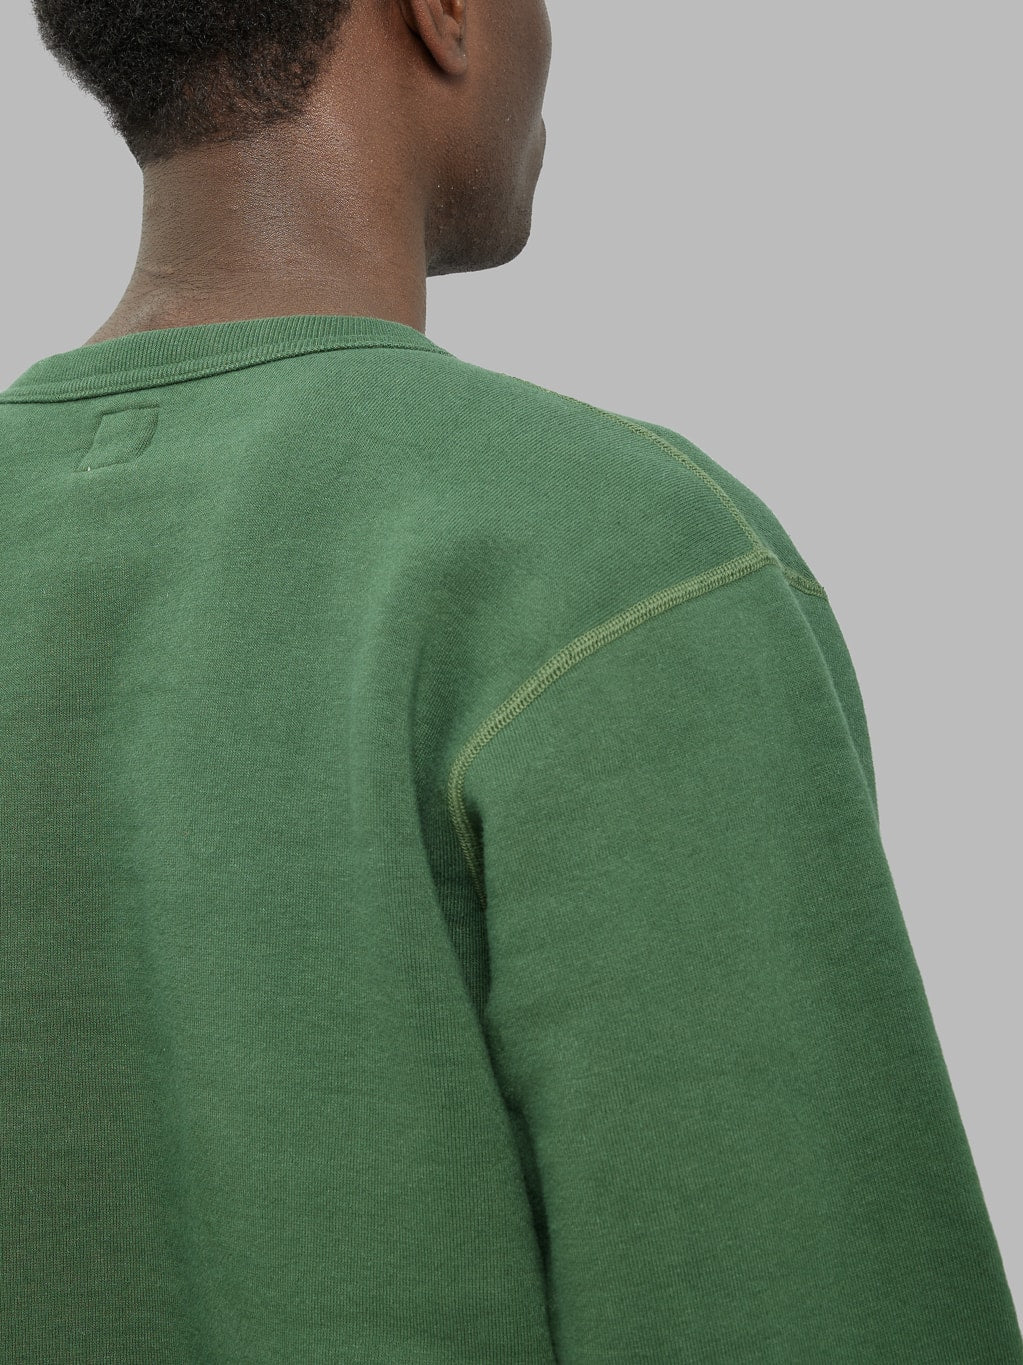 The Strike Gold Loopwheeled Sweatshirt Green